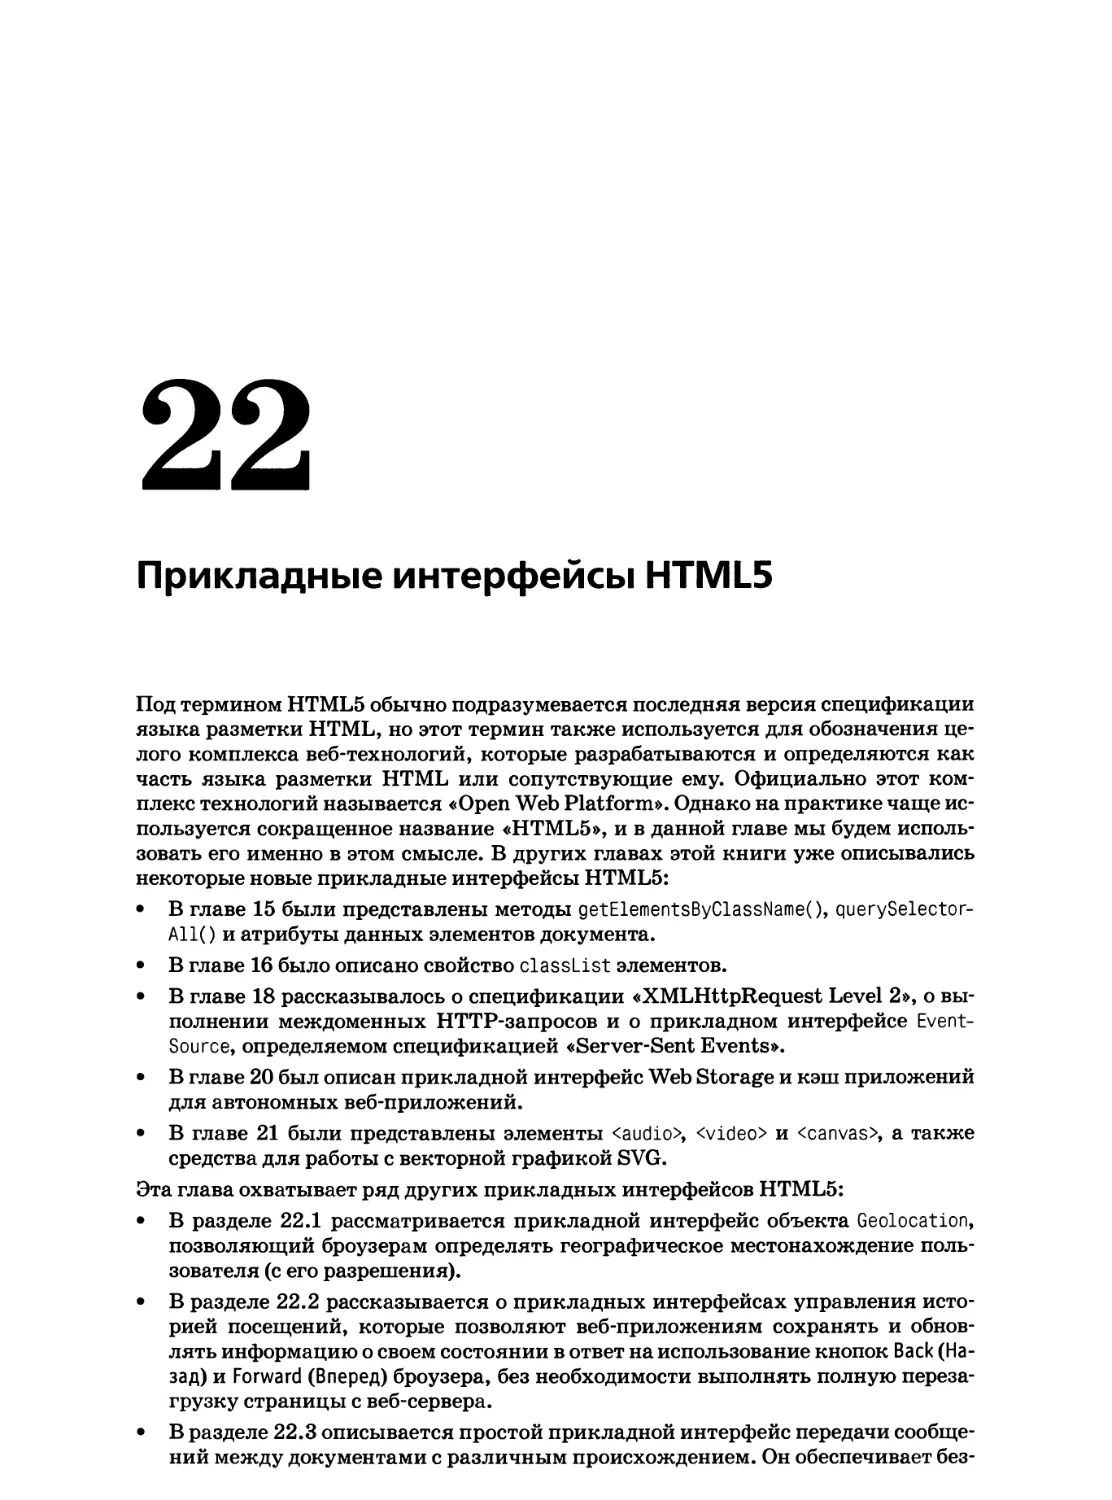 22. Прикладные интерфейсы HTML5